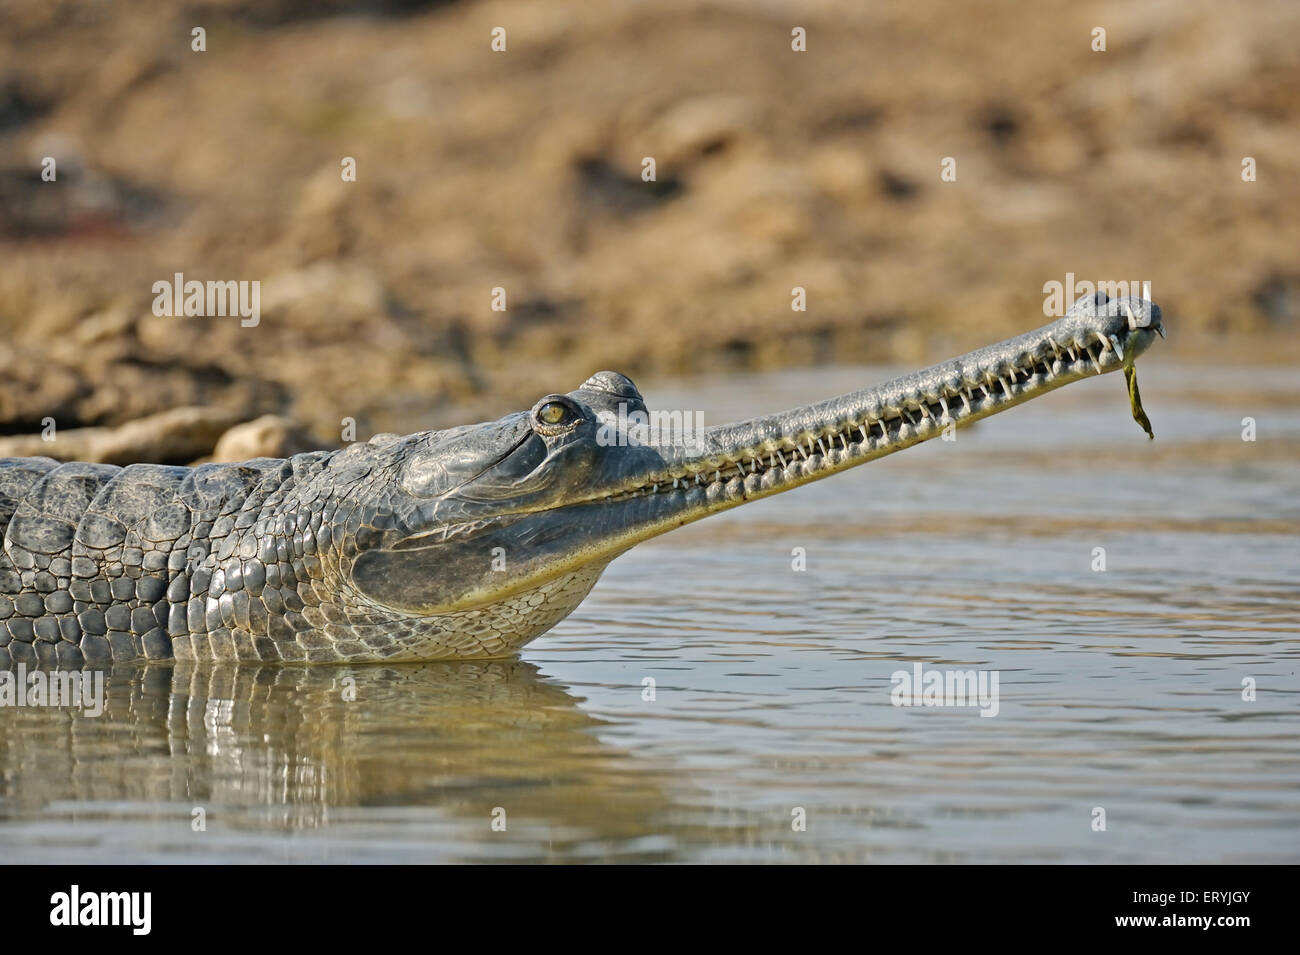 Gharial, gavial, gavialis gangeticus, fish eating crocodile, basking in Chambal river, Rajasthan, India, Asia Stock Photo